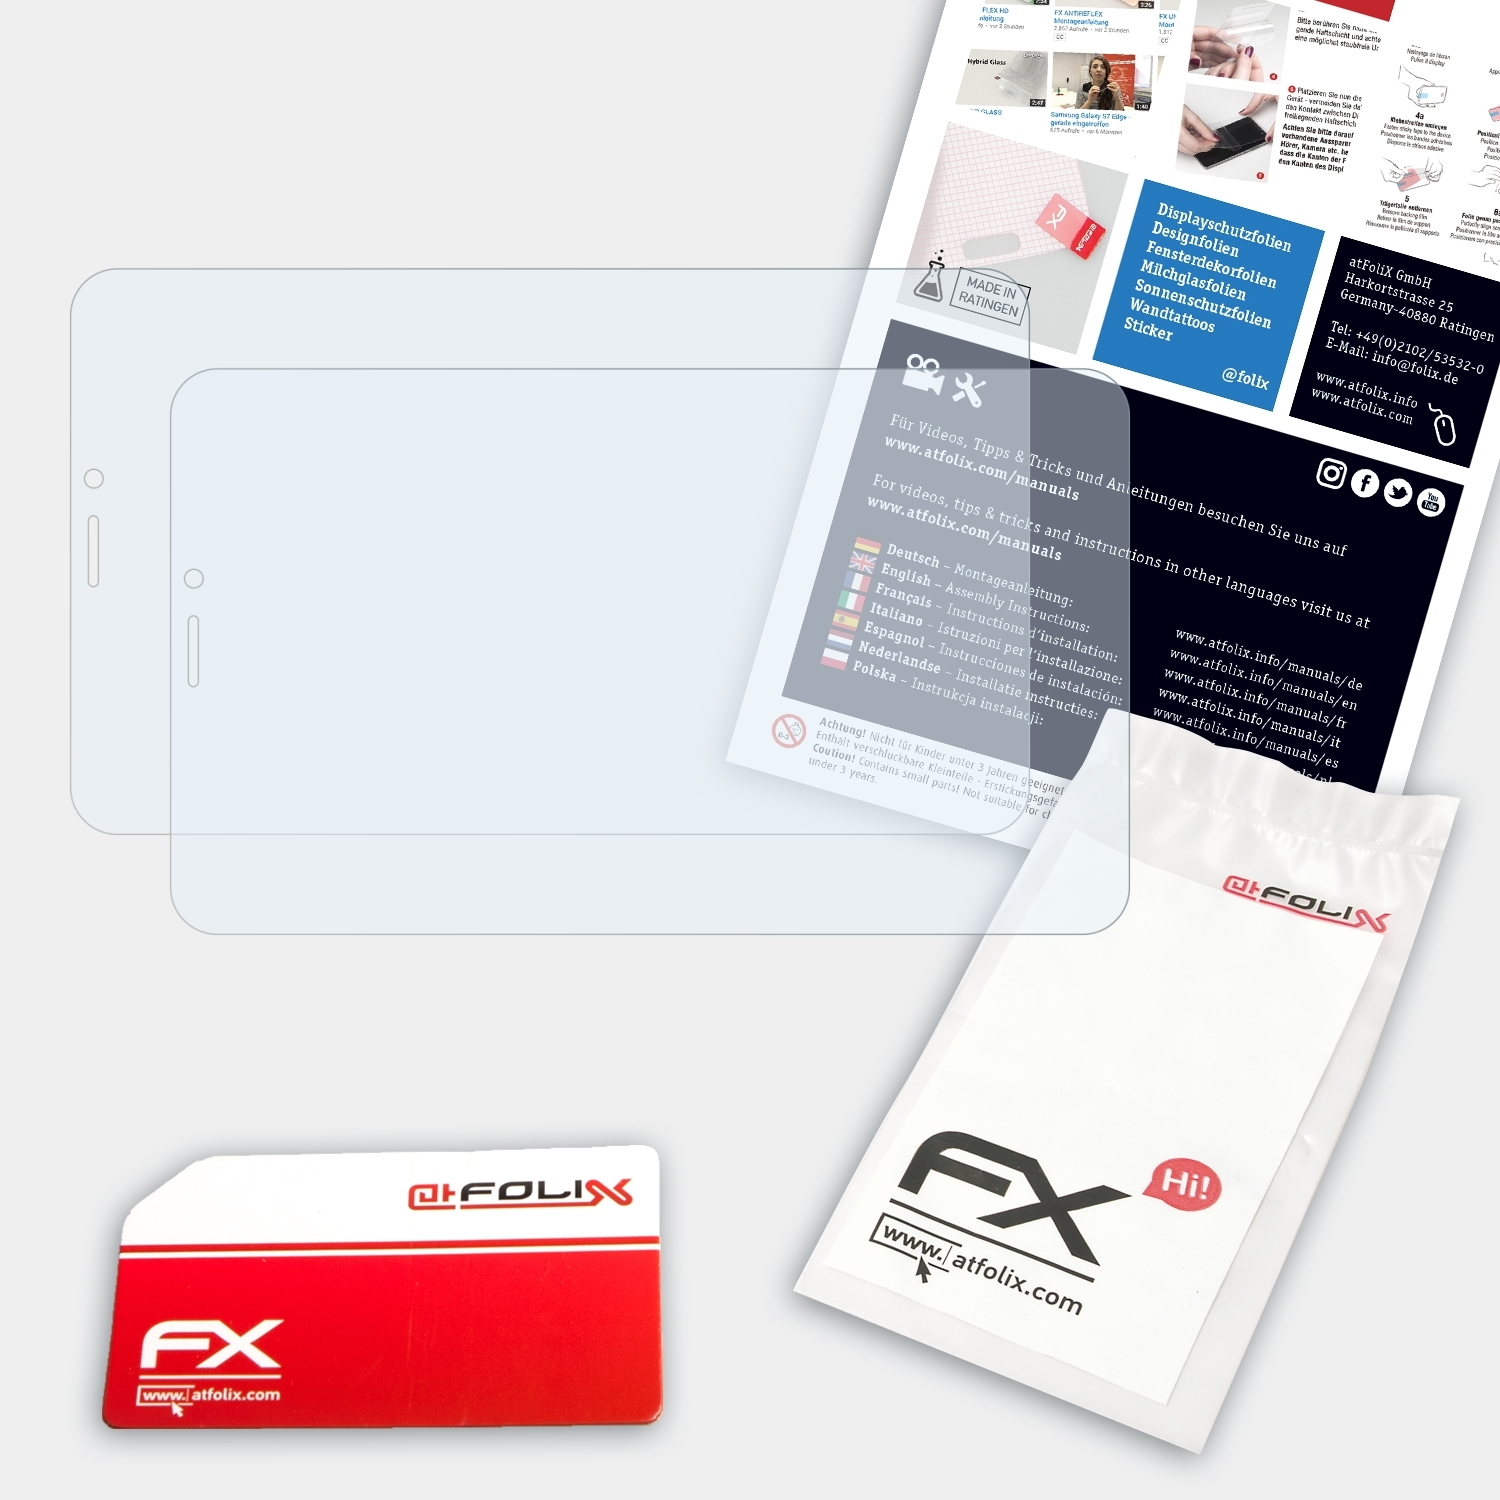 ATFOLIX 2x FX-Clear SmartPad Displayschutz(für Mediacom MX 8)